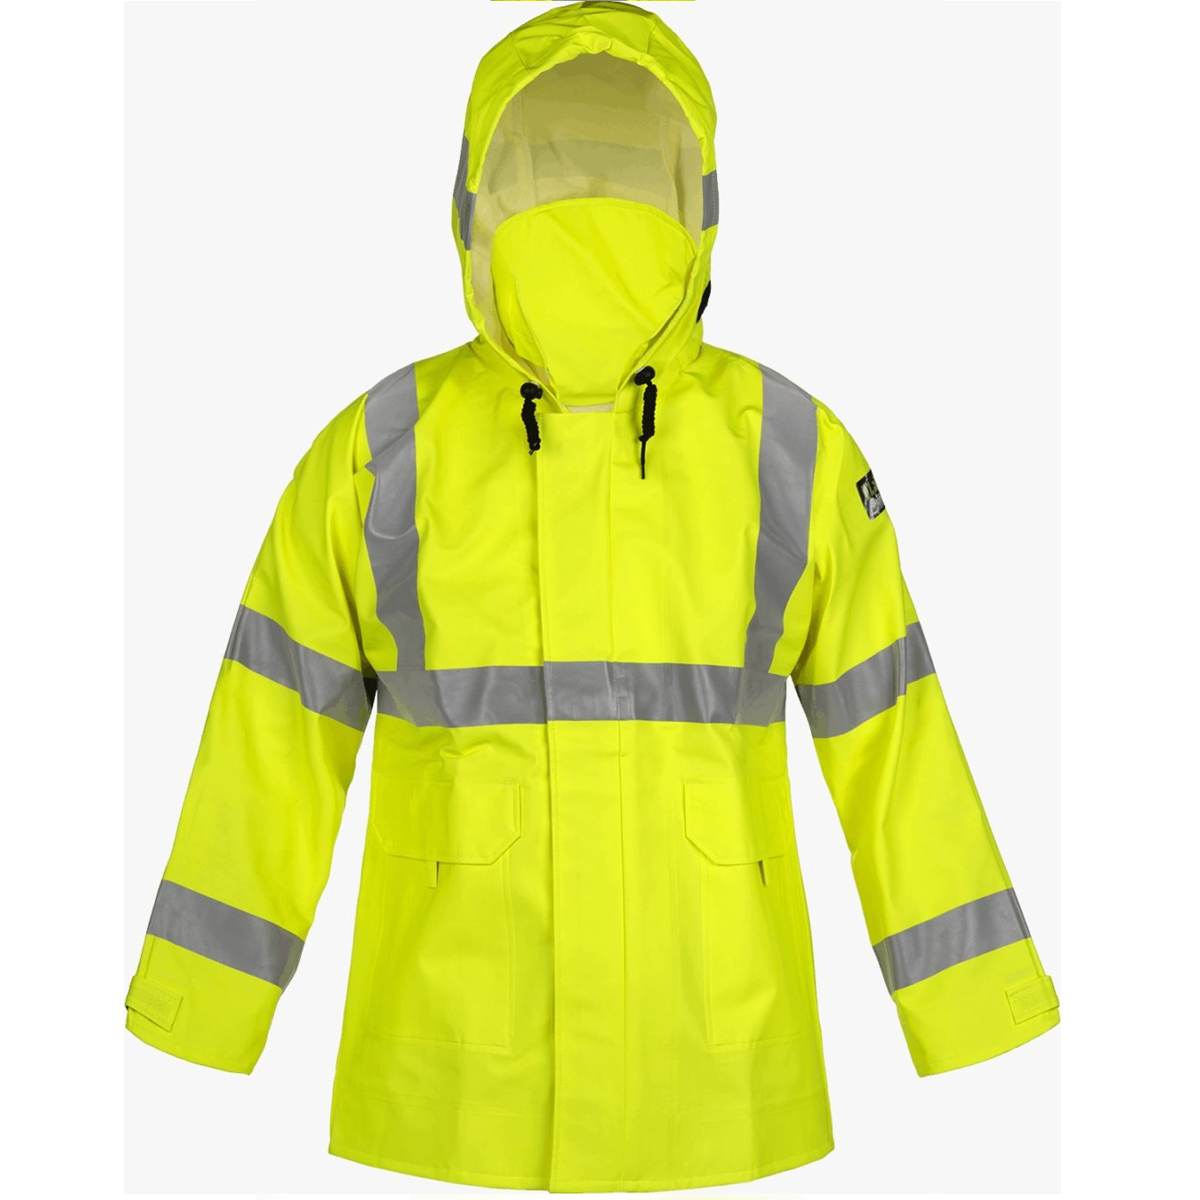 FR ARC Rated PVC Rain Jacket in hi-vis yellow